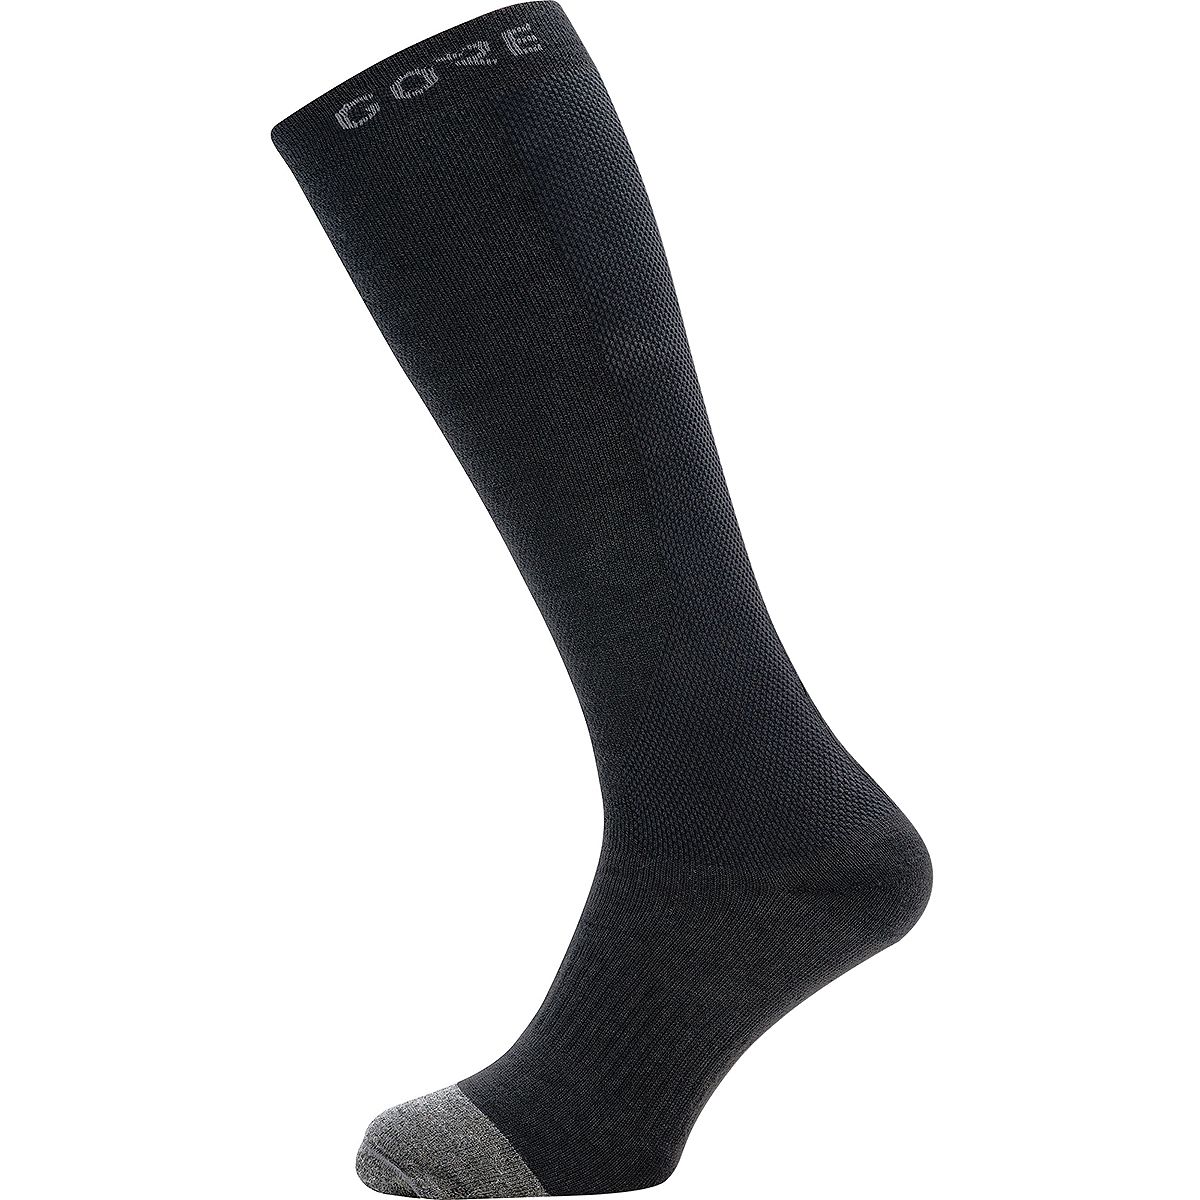 GOREWEAR Thermo Long Sock Black/Graphite Grey, 3.5-5.0 - Men's